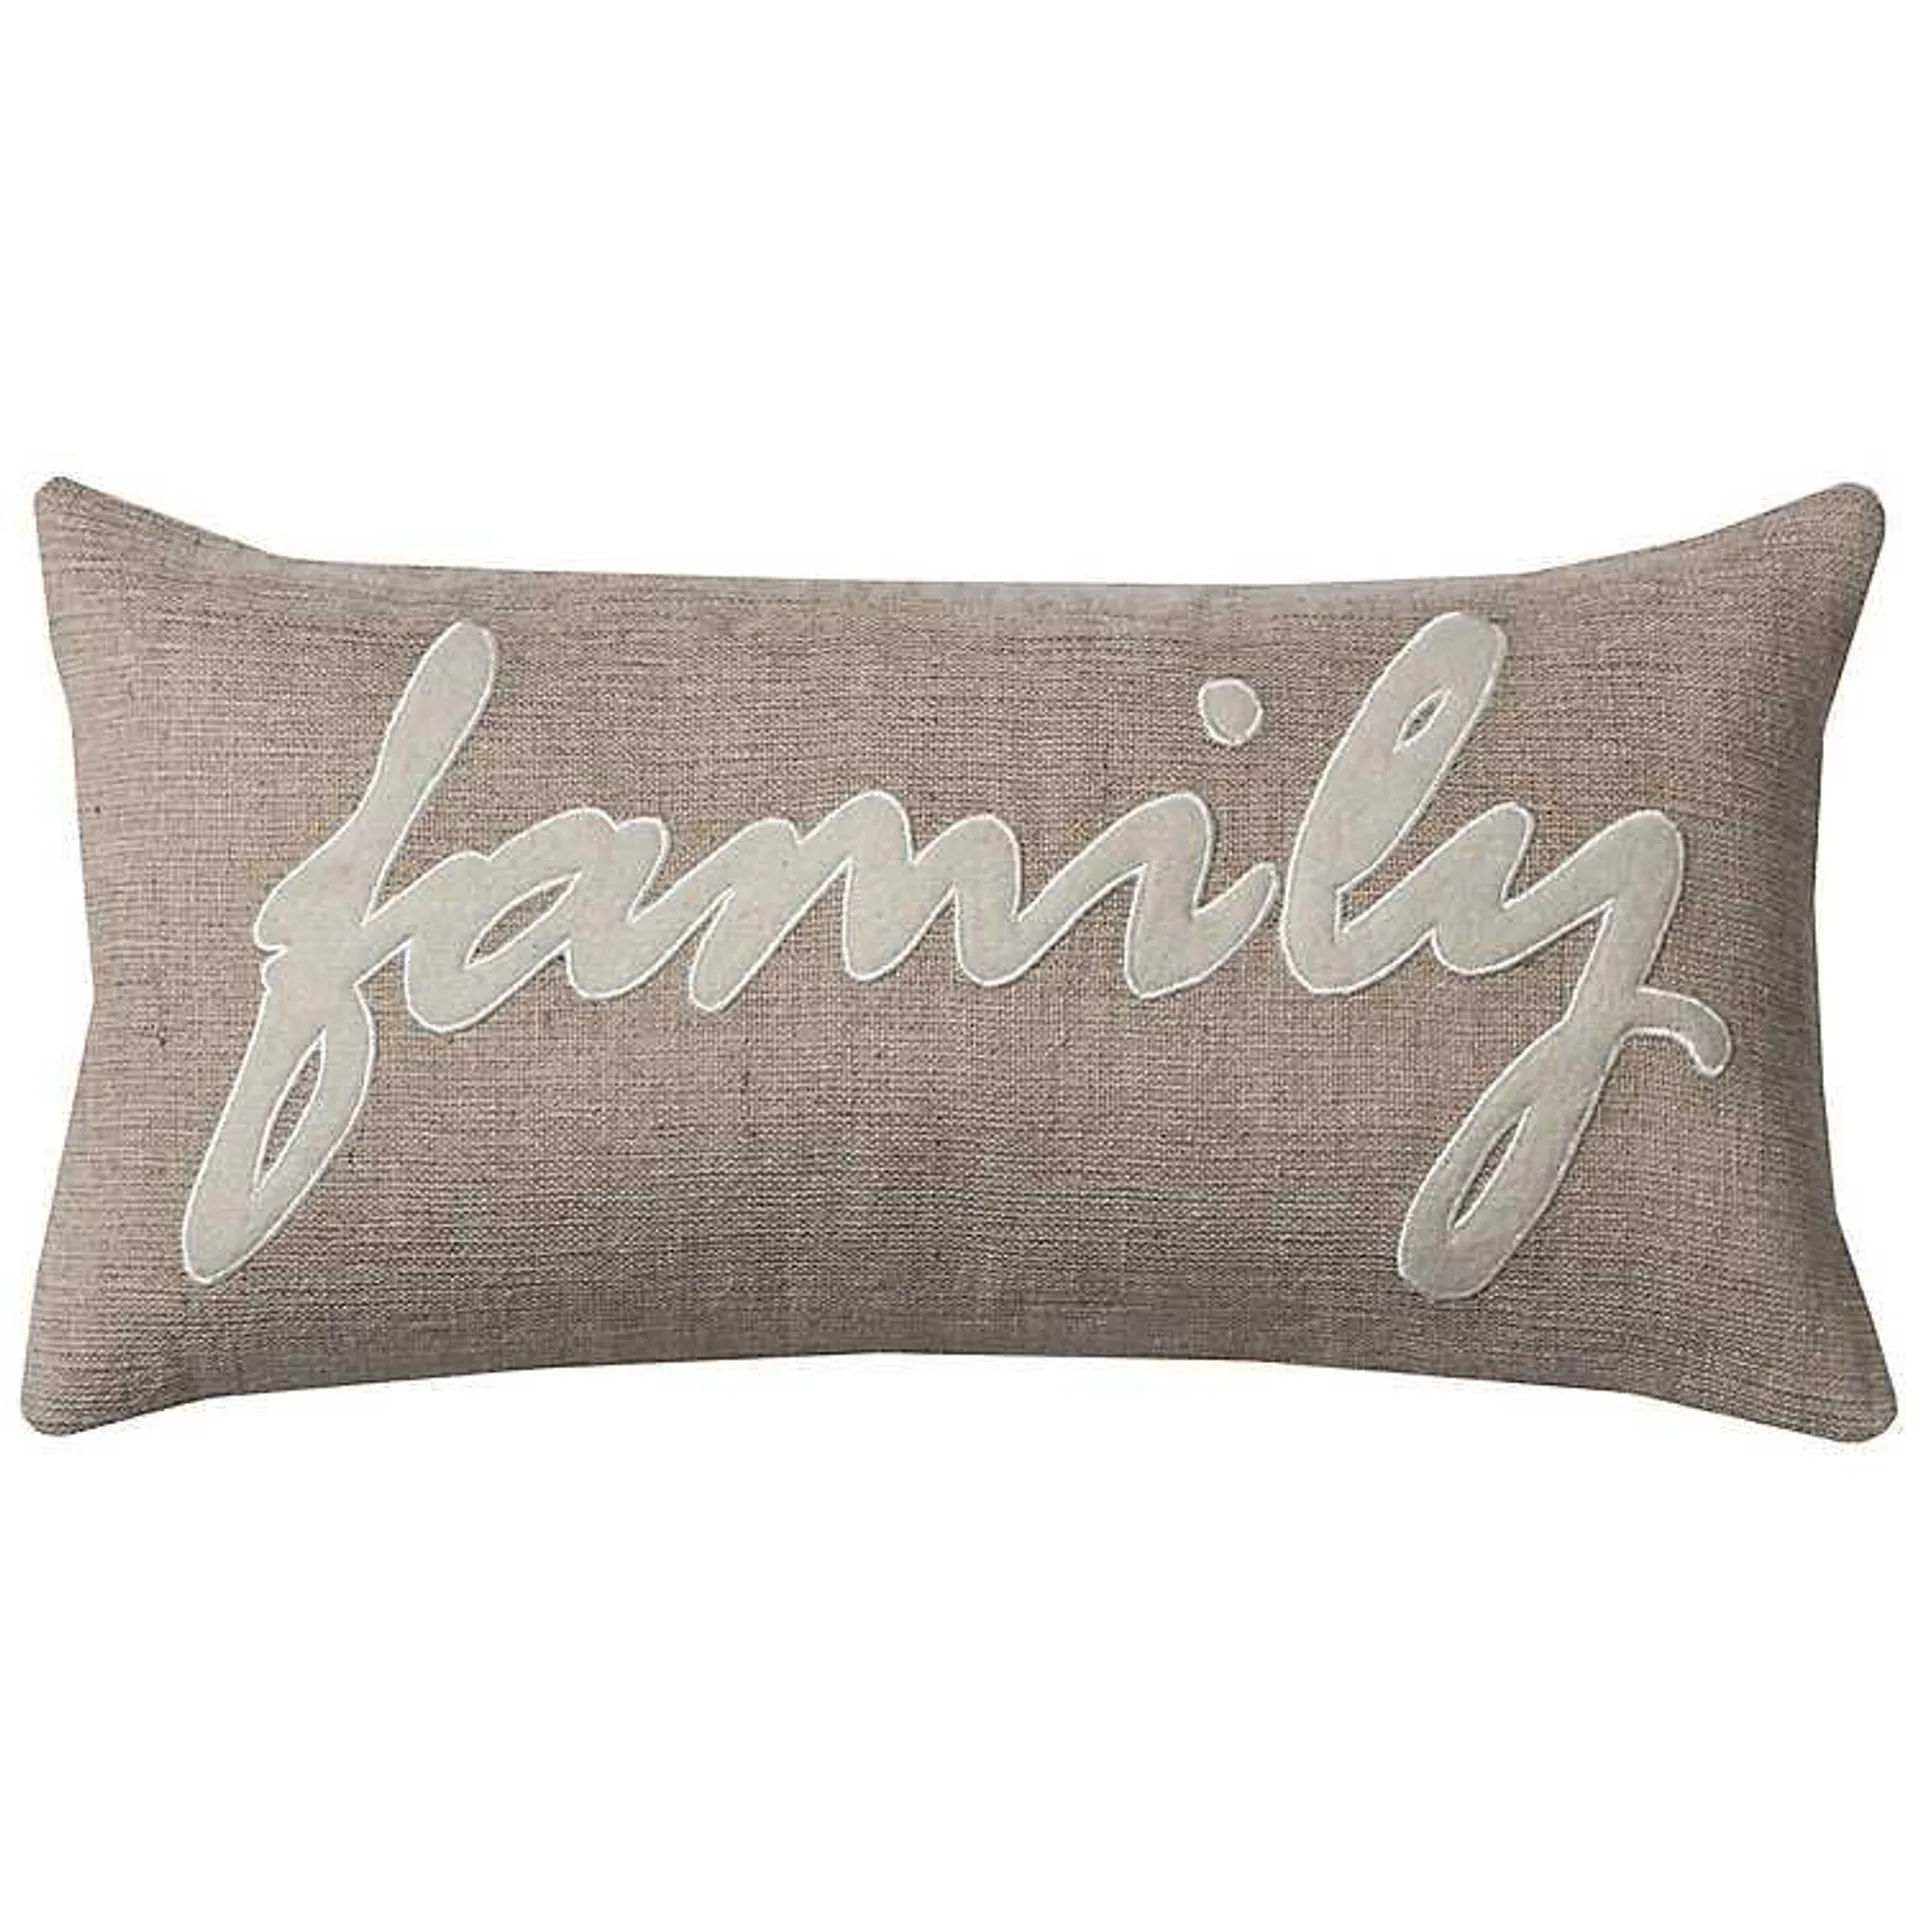 Family Jute Accent Pillow